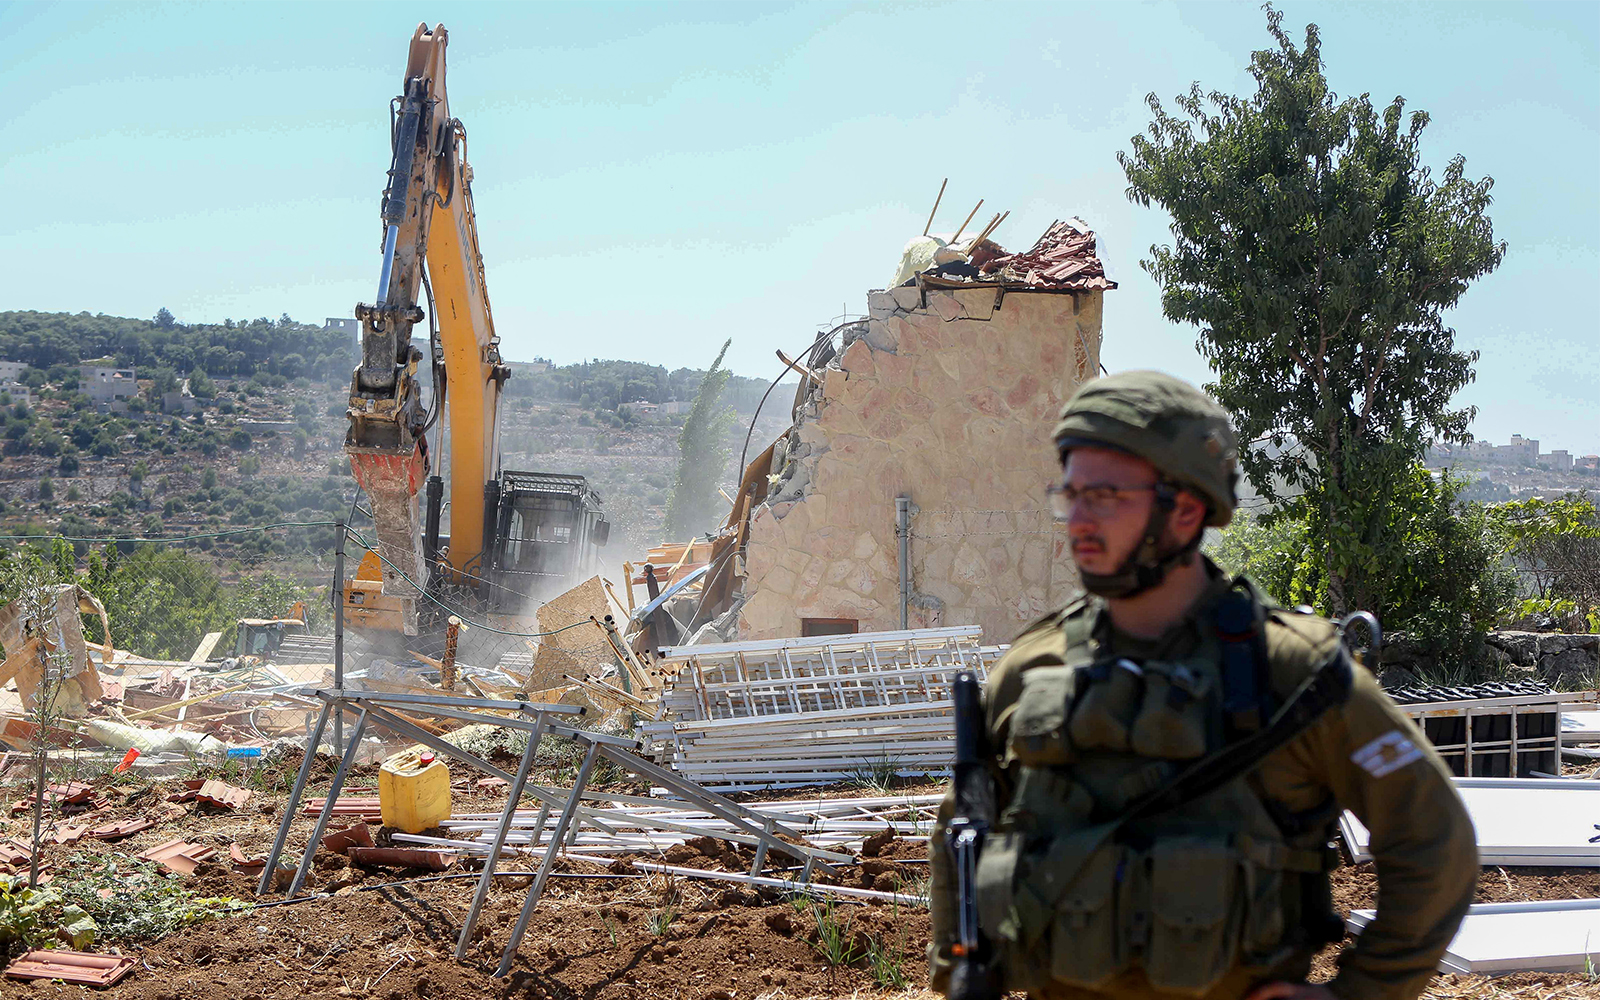 NRC: Israel’s Destruction of Palestinian Property Undermines Efforts to Curb COVID-19